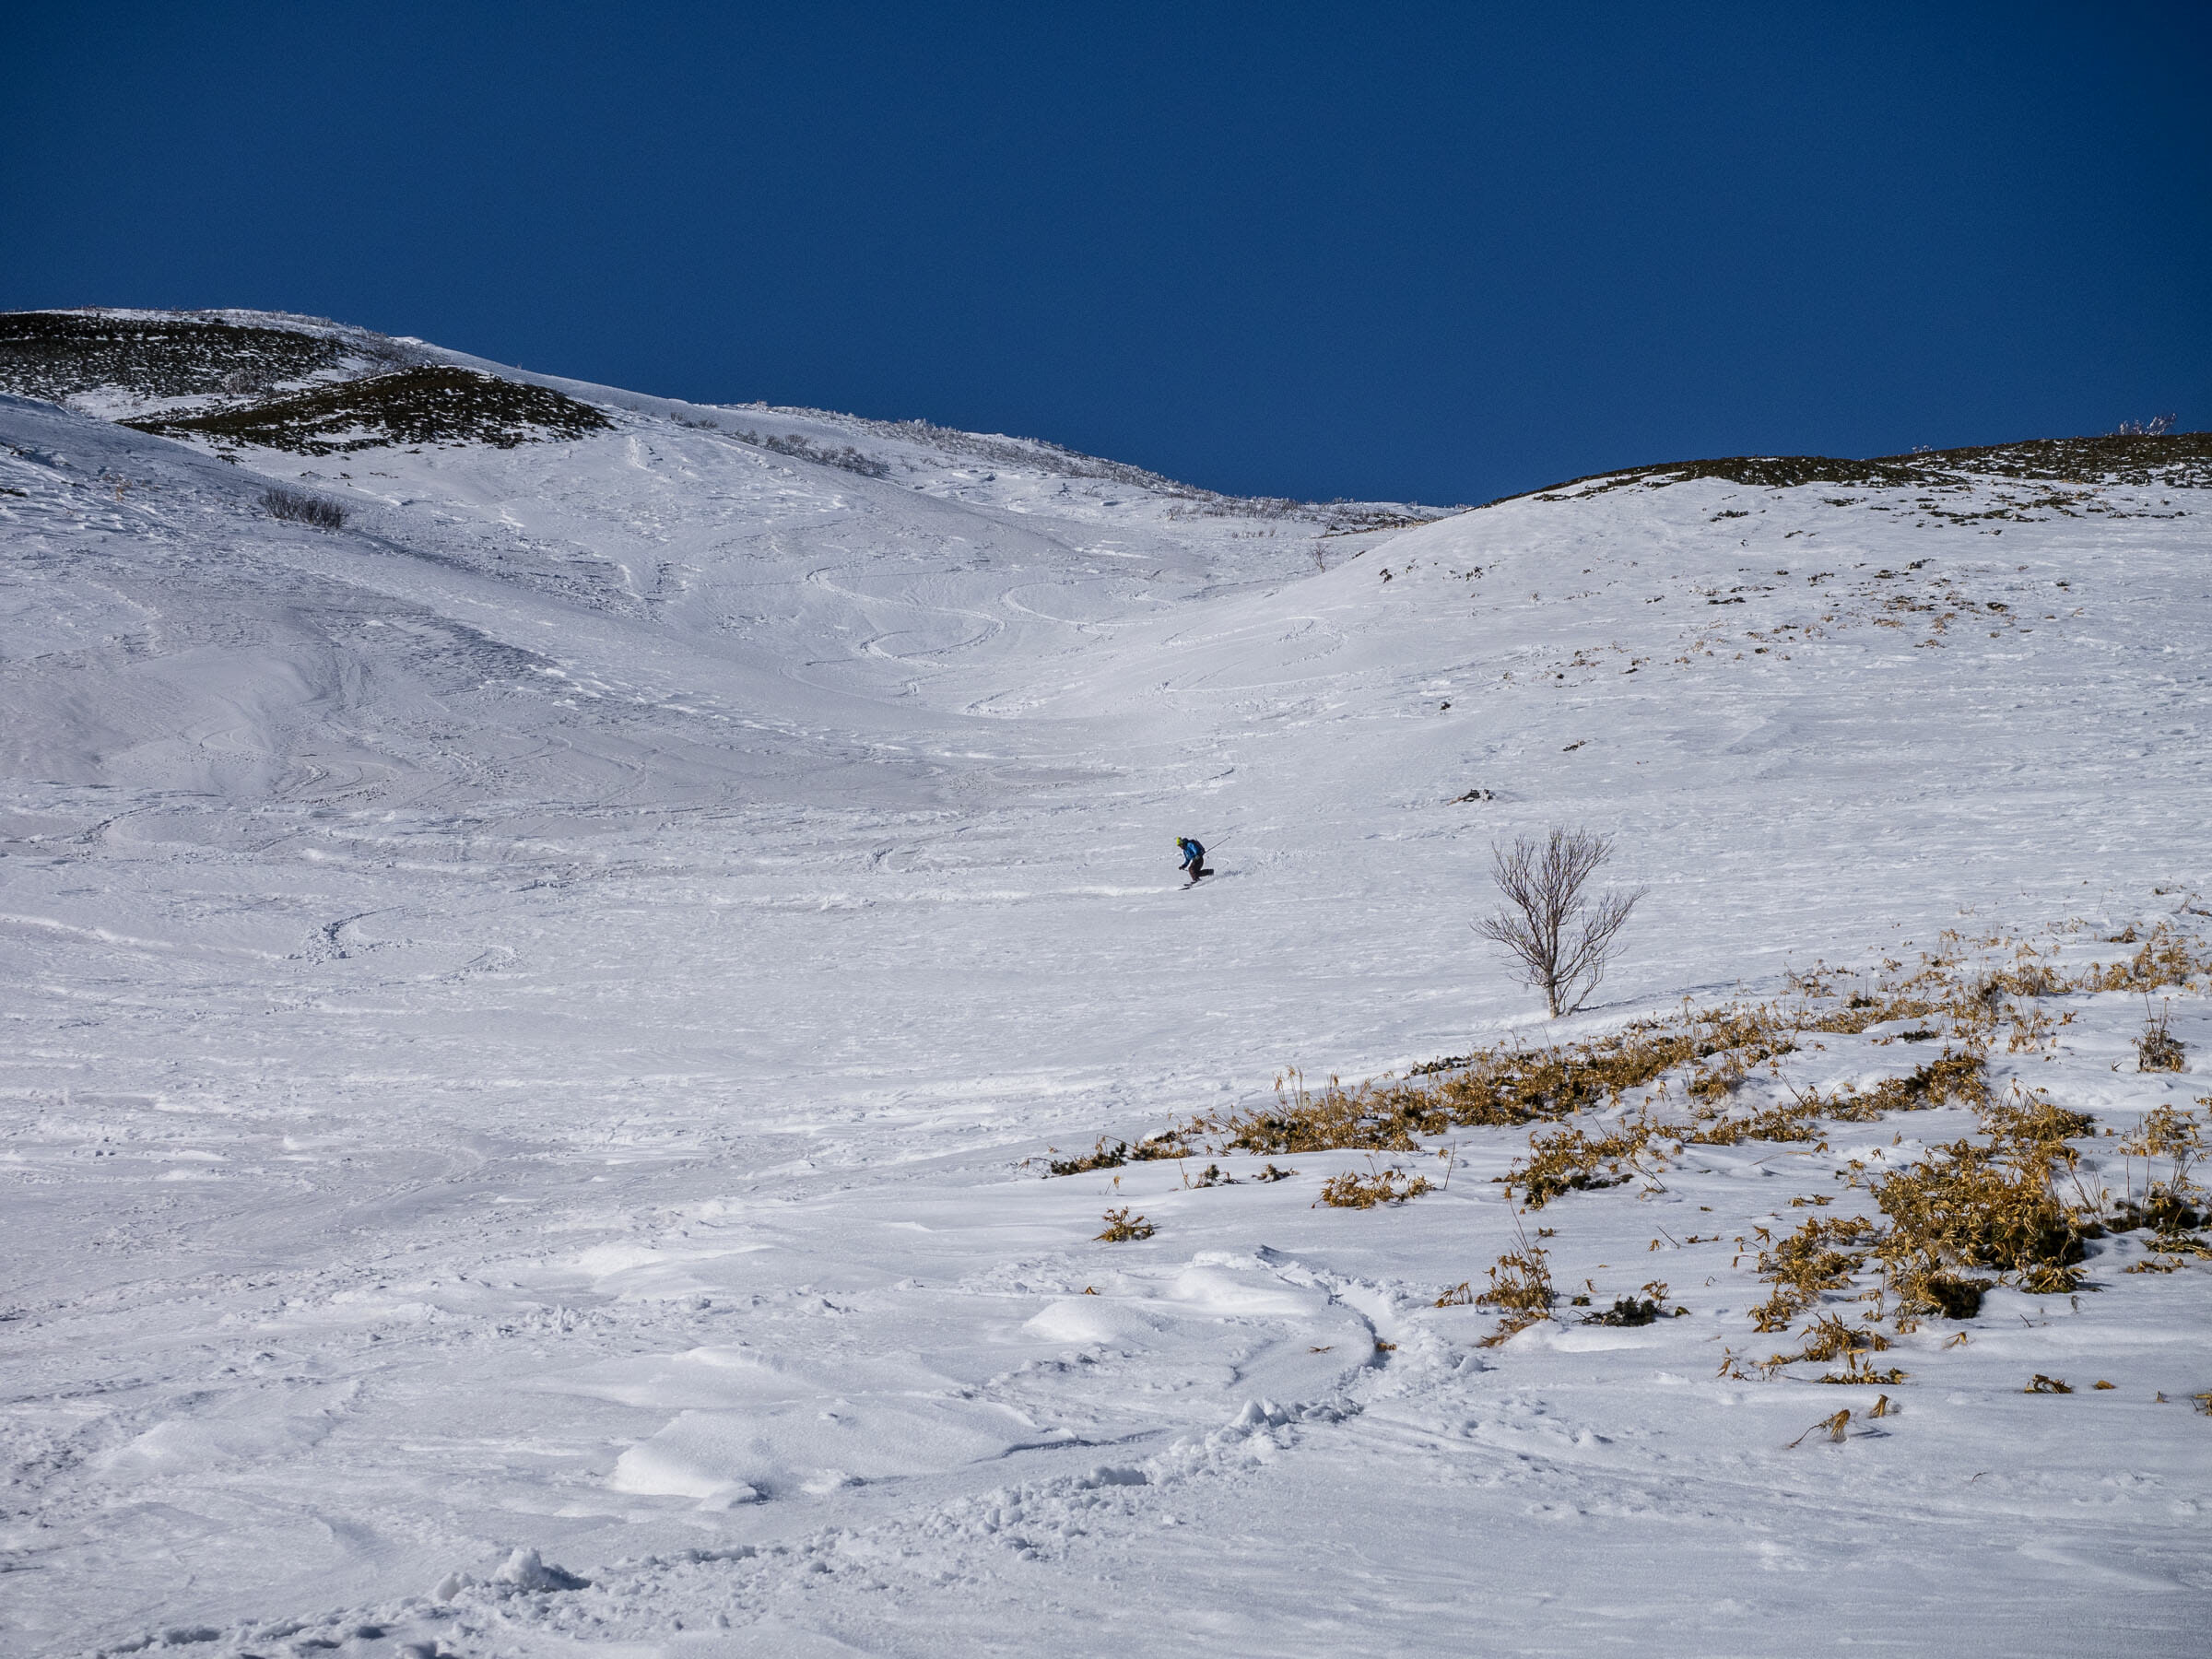 Mt. Rishiri Southeast Ski Tour Route | HokkaidoWilds.org